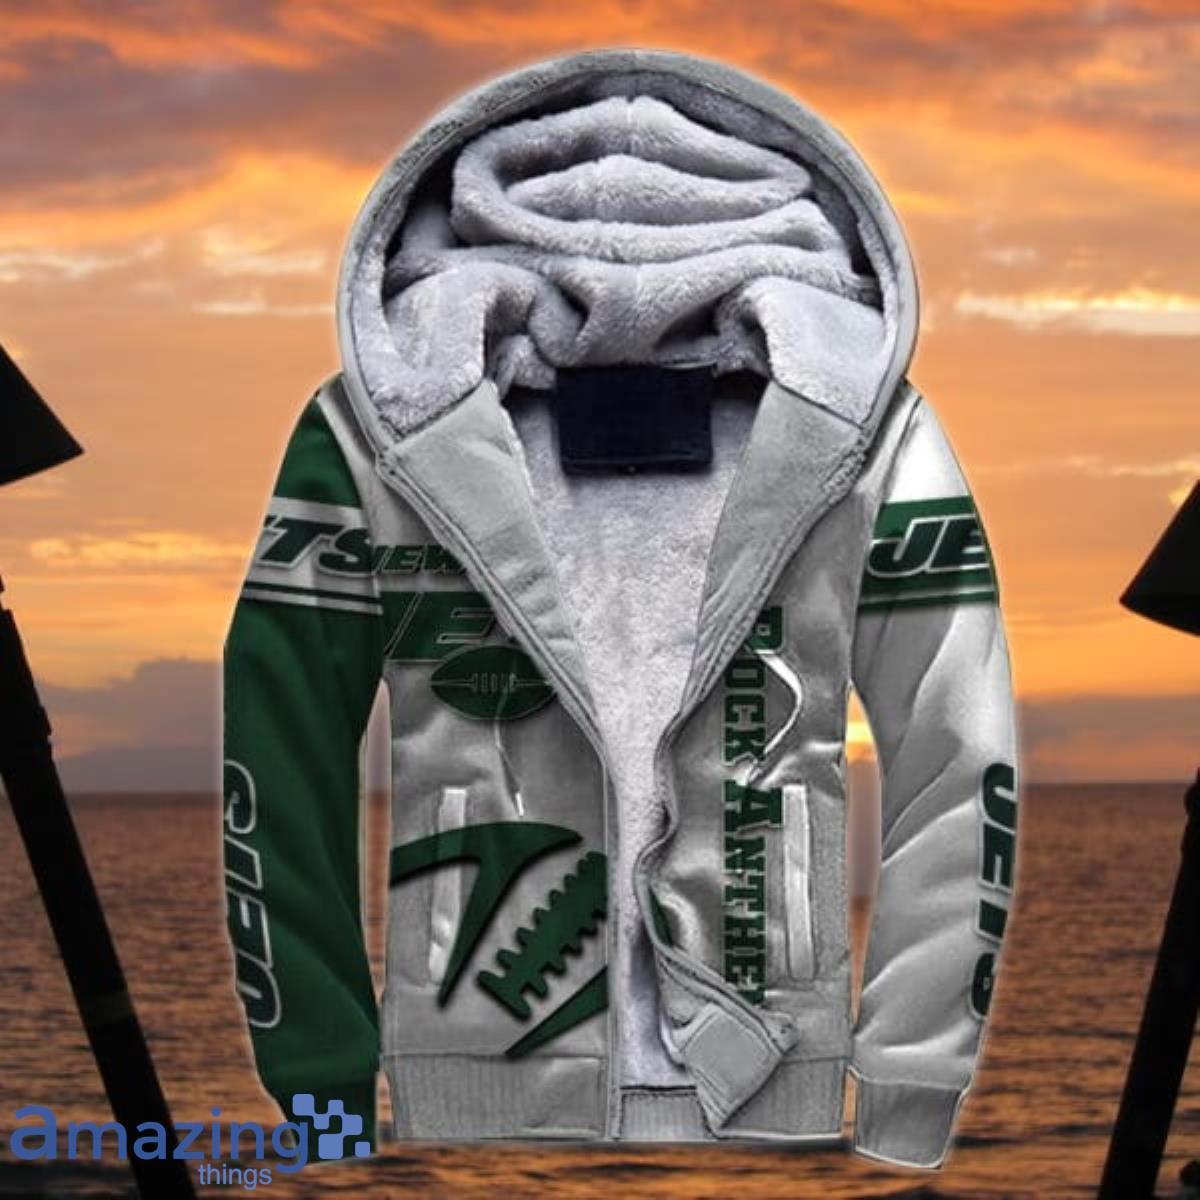 New York Jets Sweatshirts & Hoodies for Sale